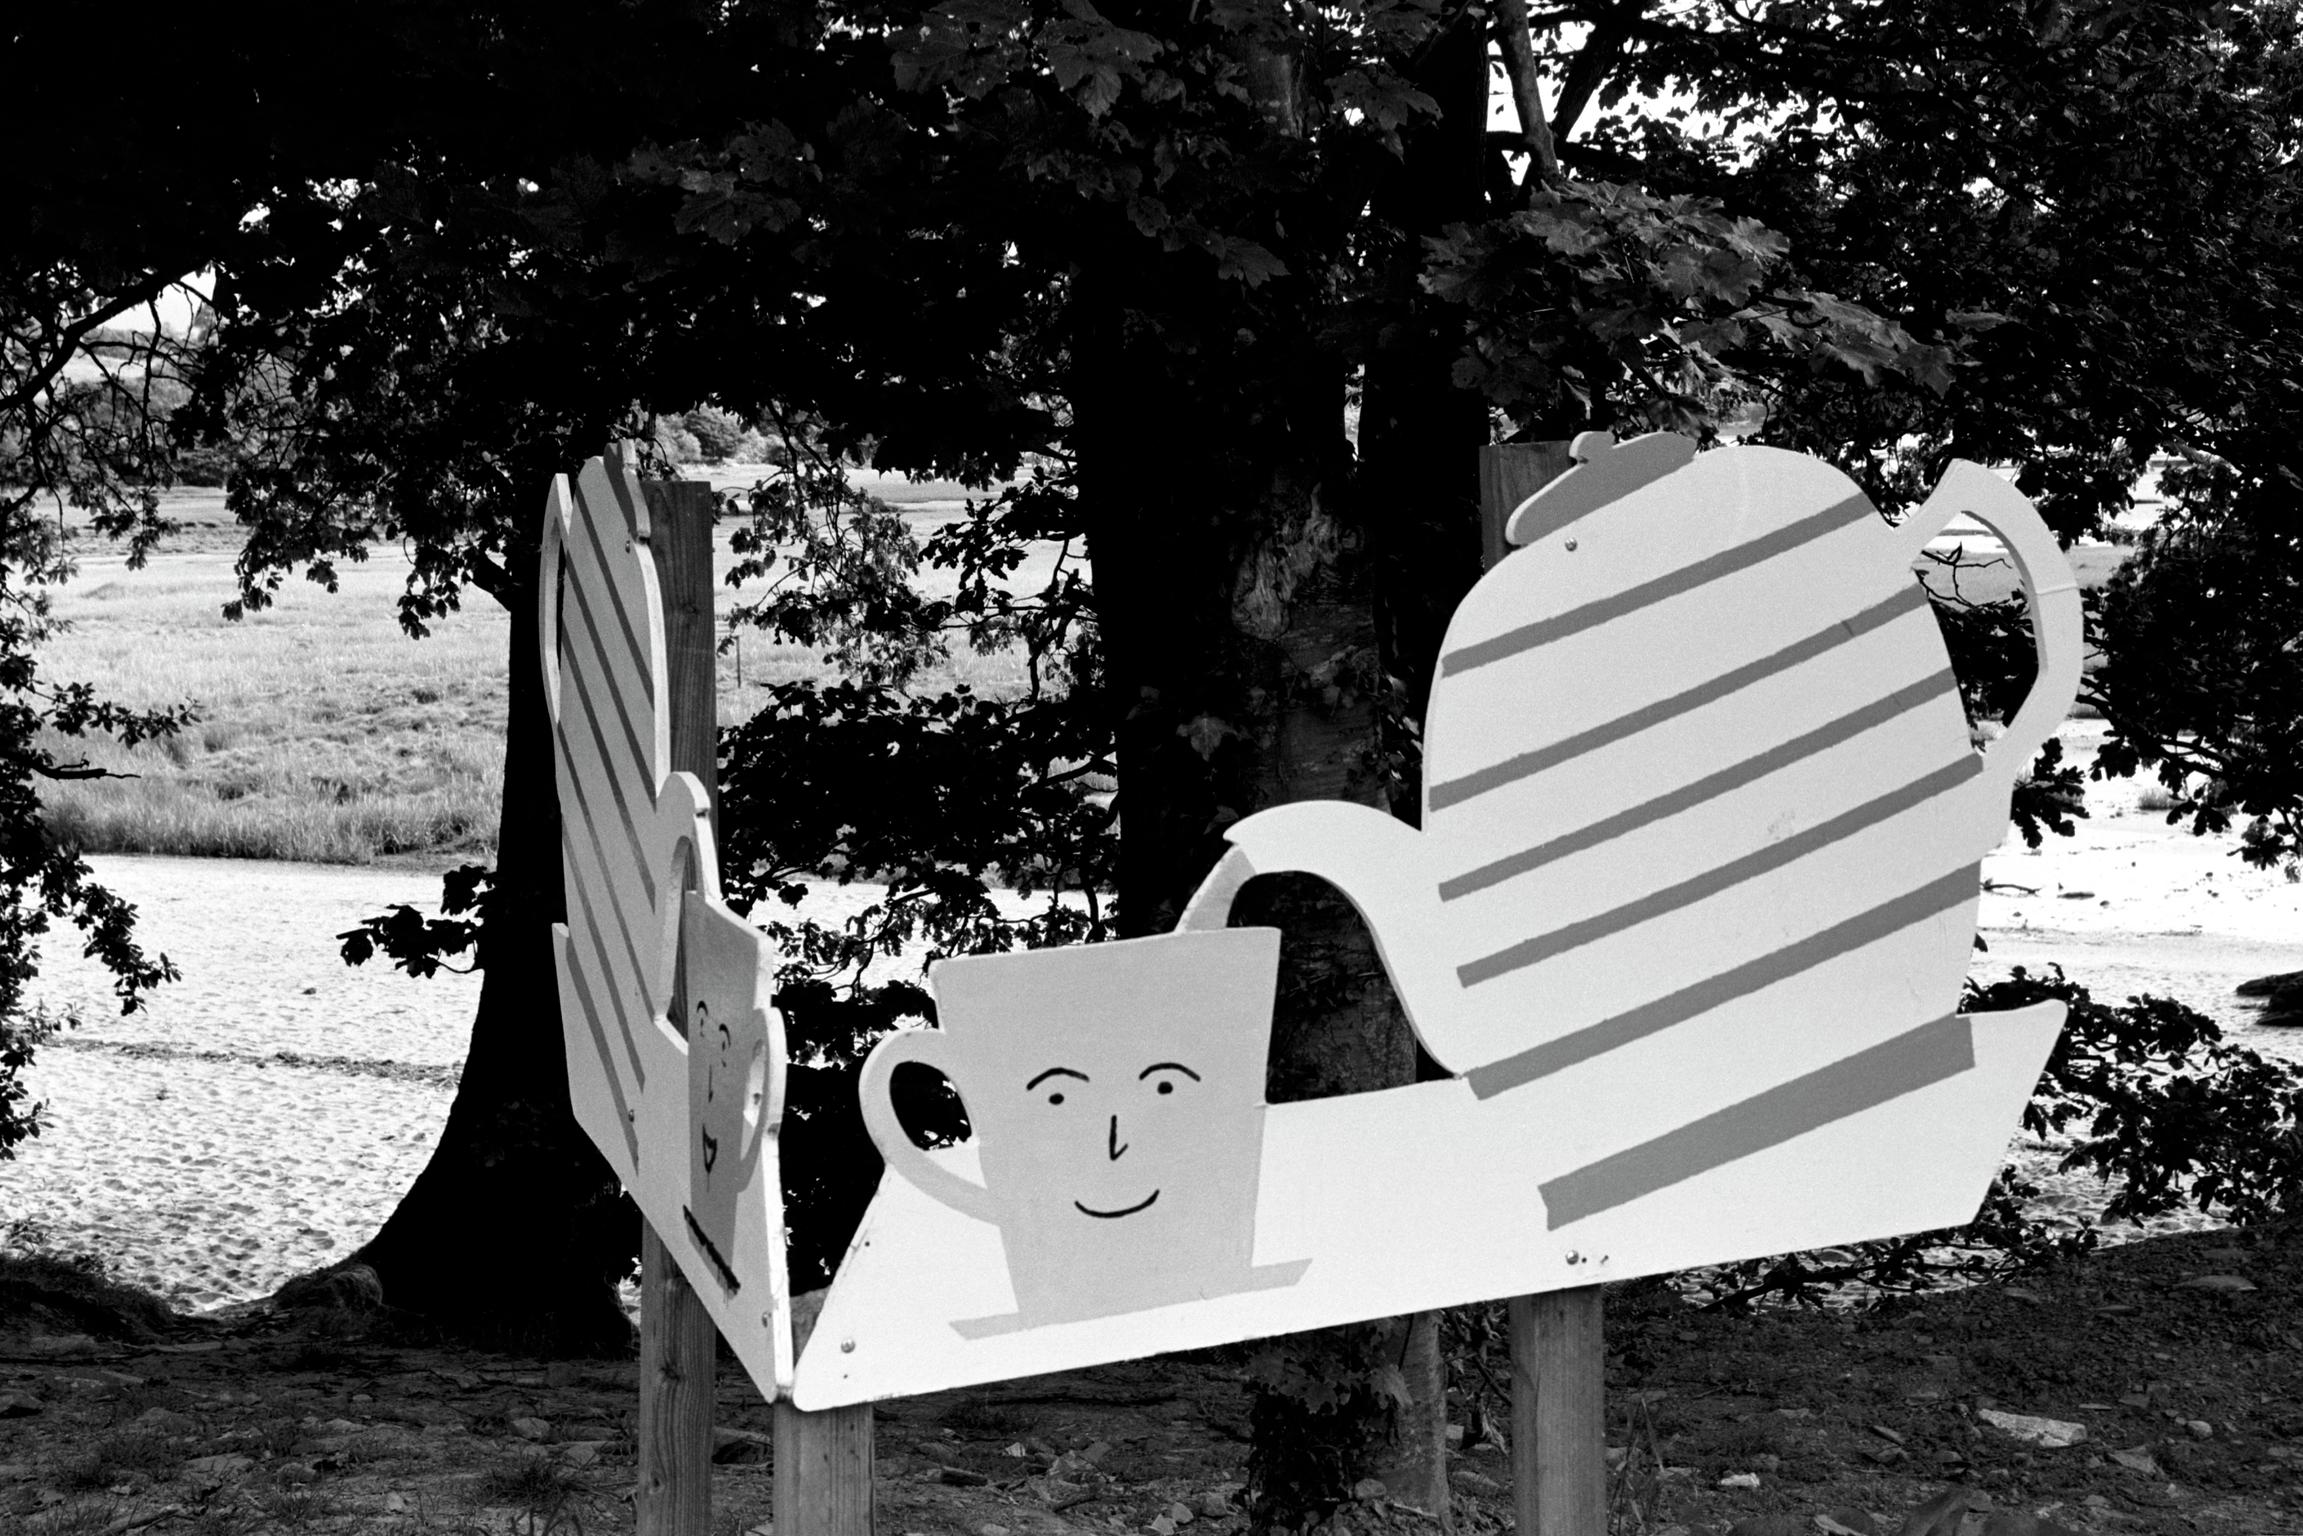 Sculptures Exposed. Transport Café sign near Dumfries. Scotland